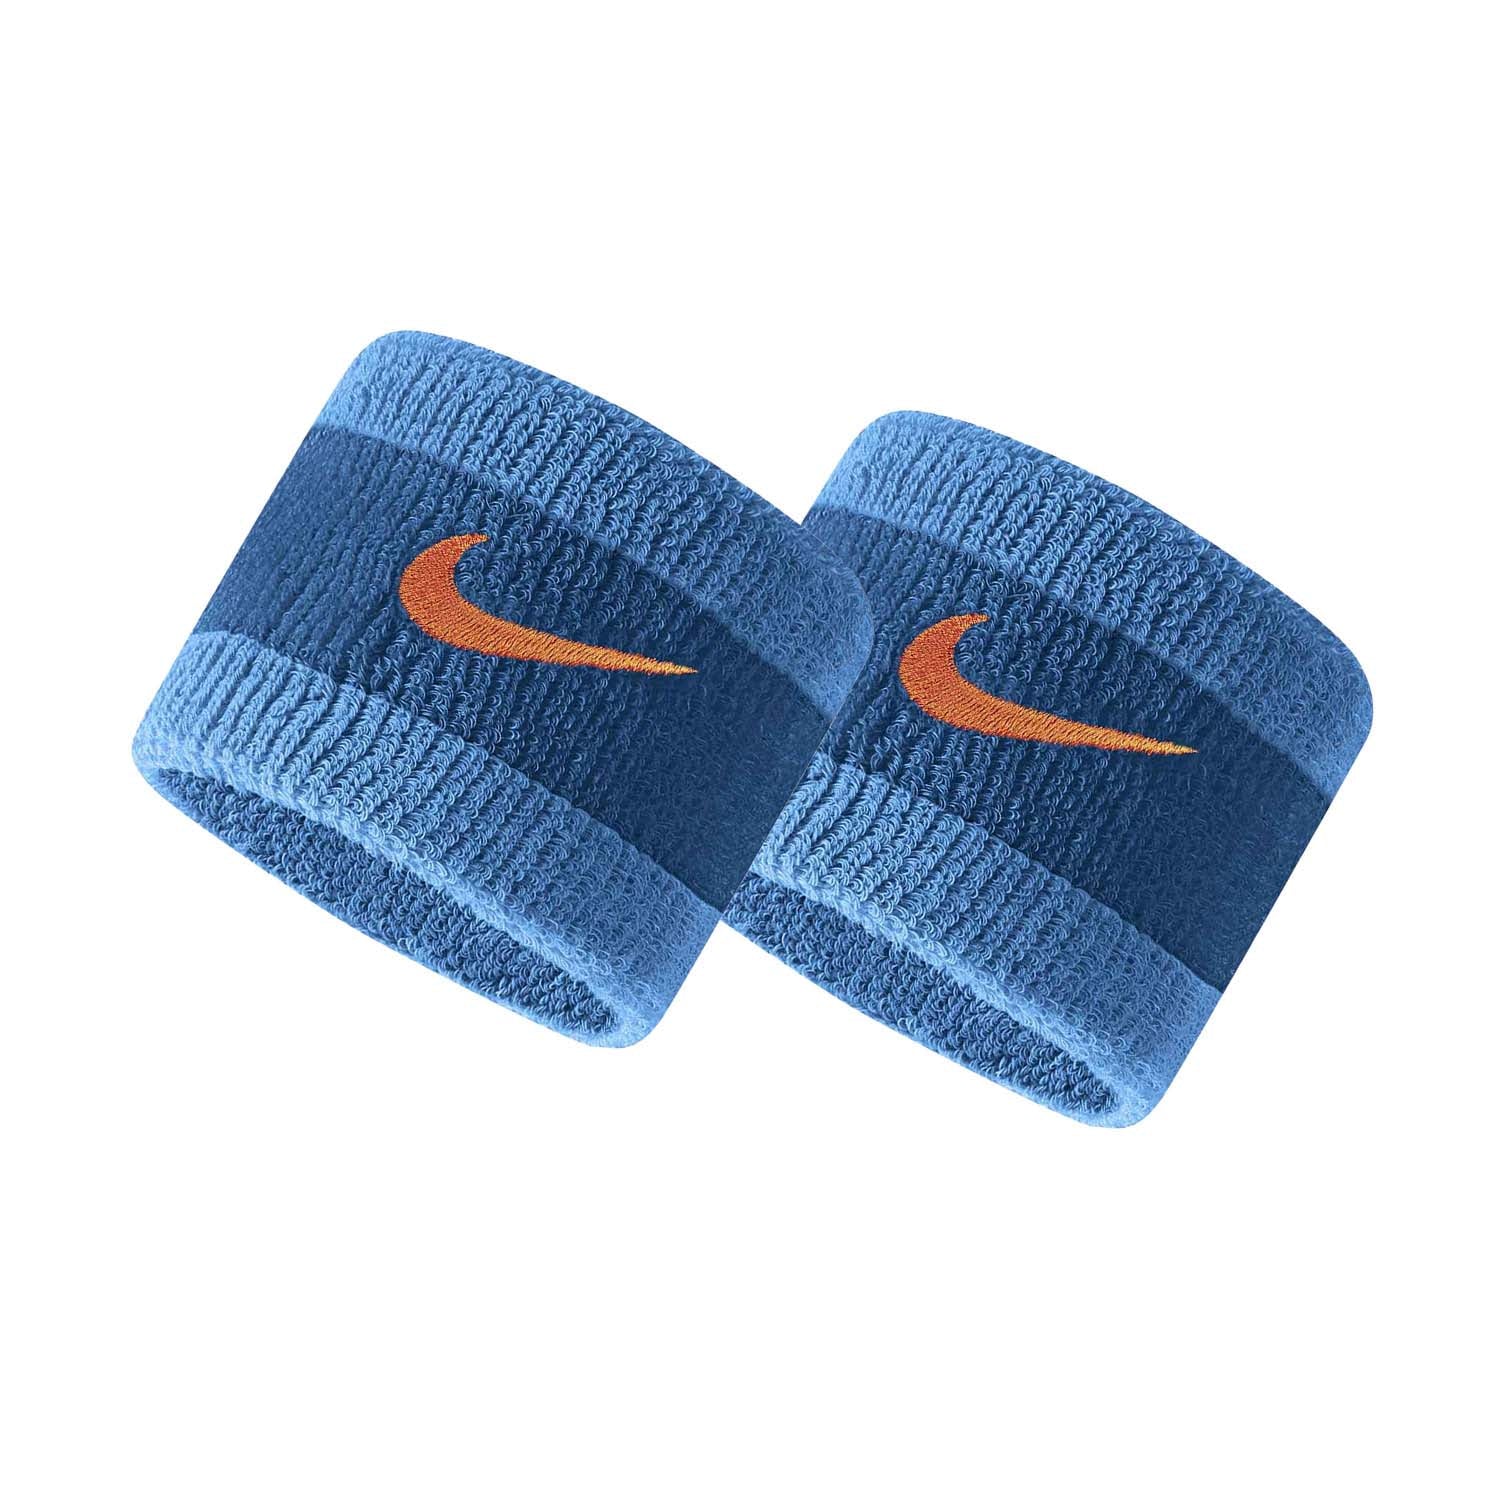 Nike Swoosh cuffs